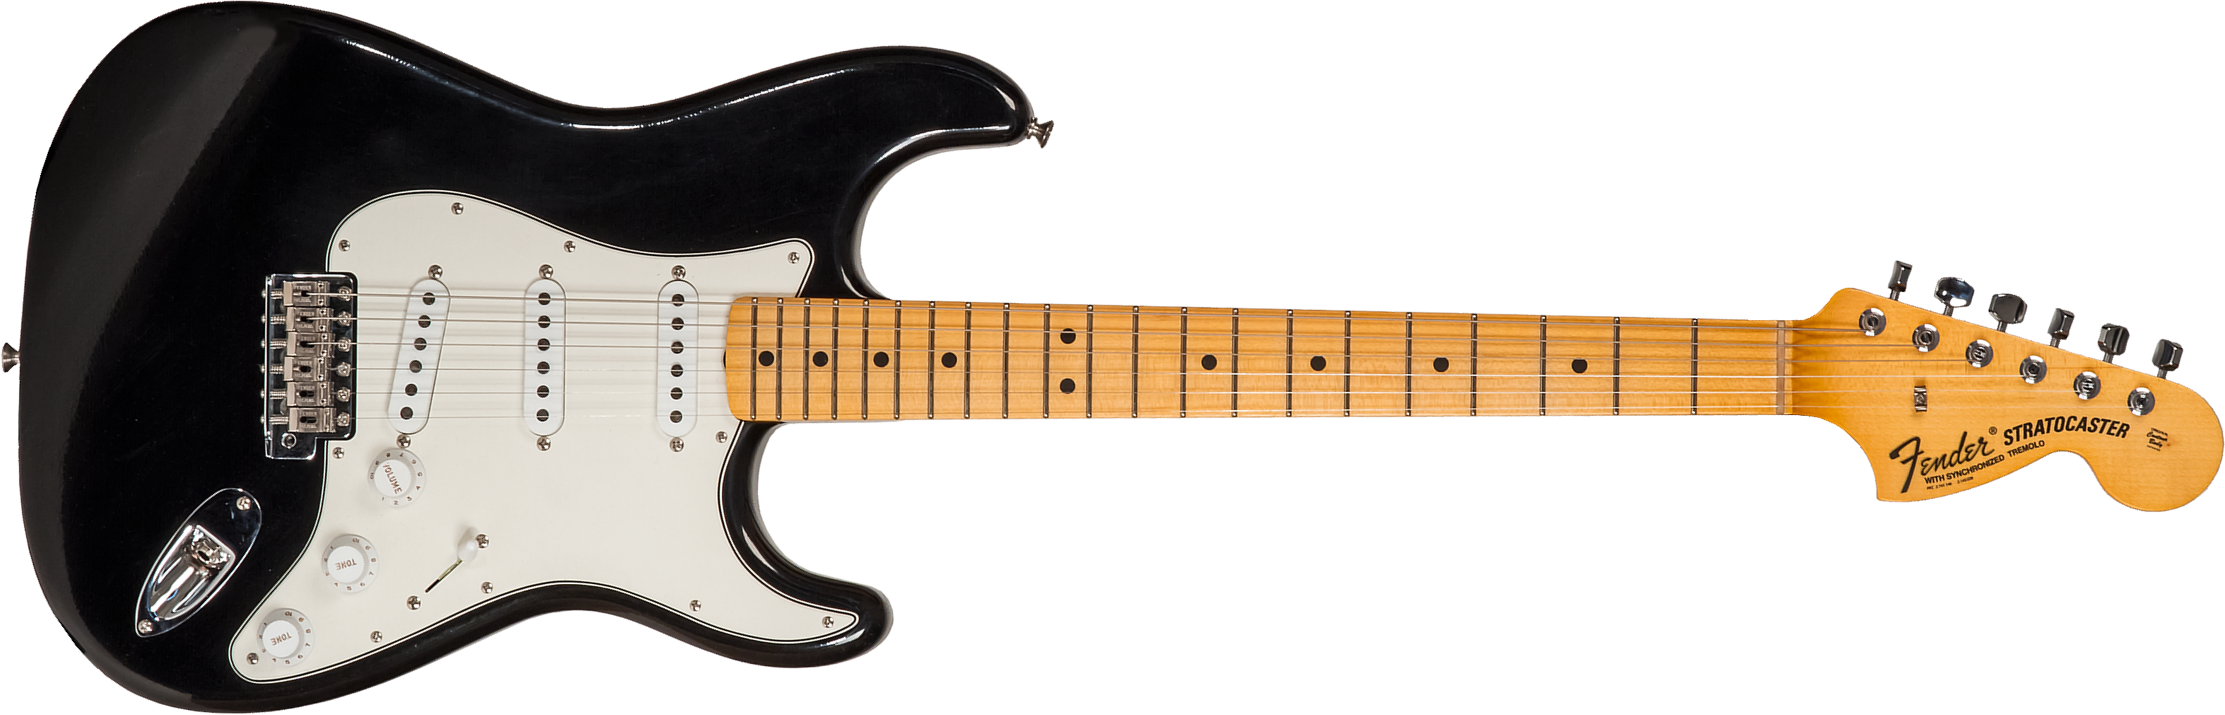 Fender Custom Shop Strat 1969 3s Trem Mn #r127670 - Closet Classic Black - Guitarra eléctrica con forma de str. - Main picture